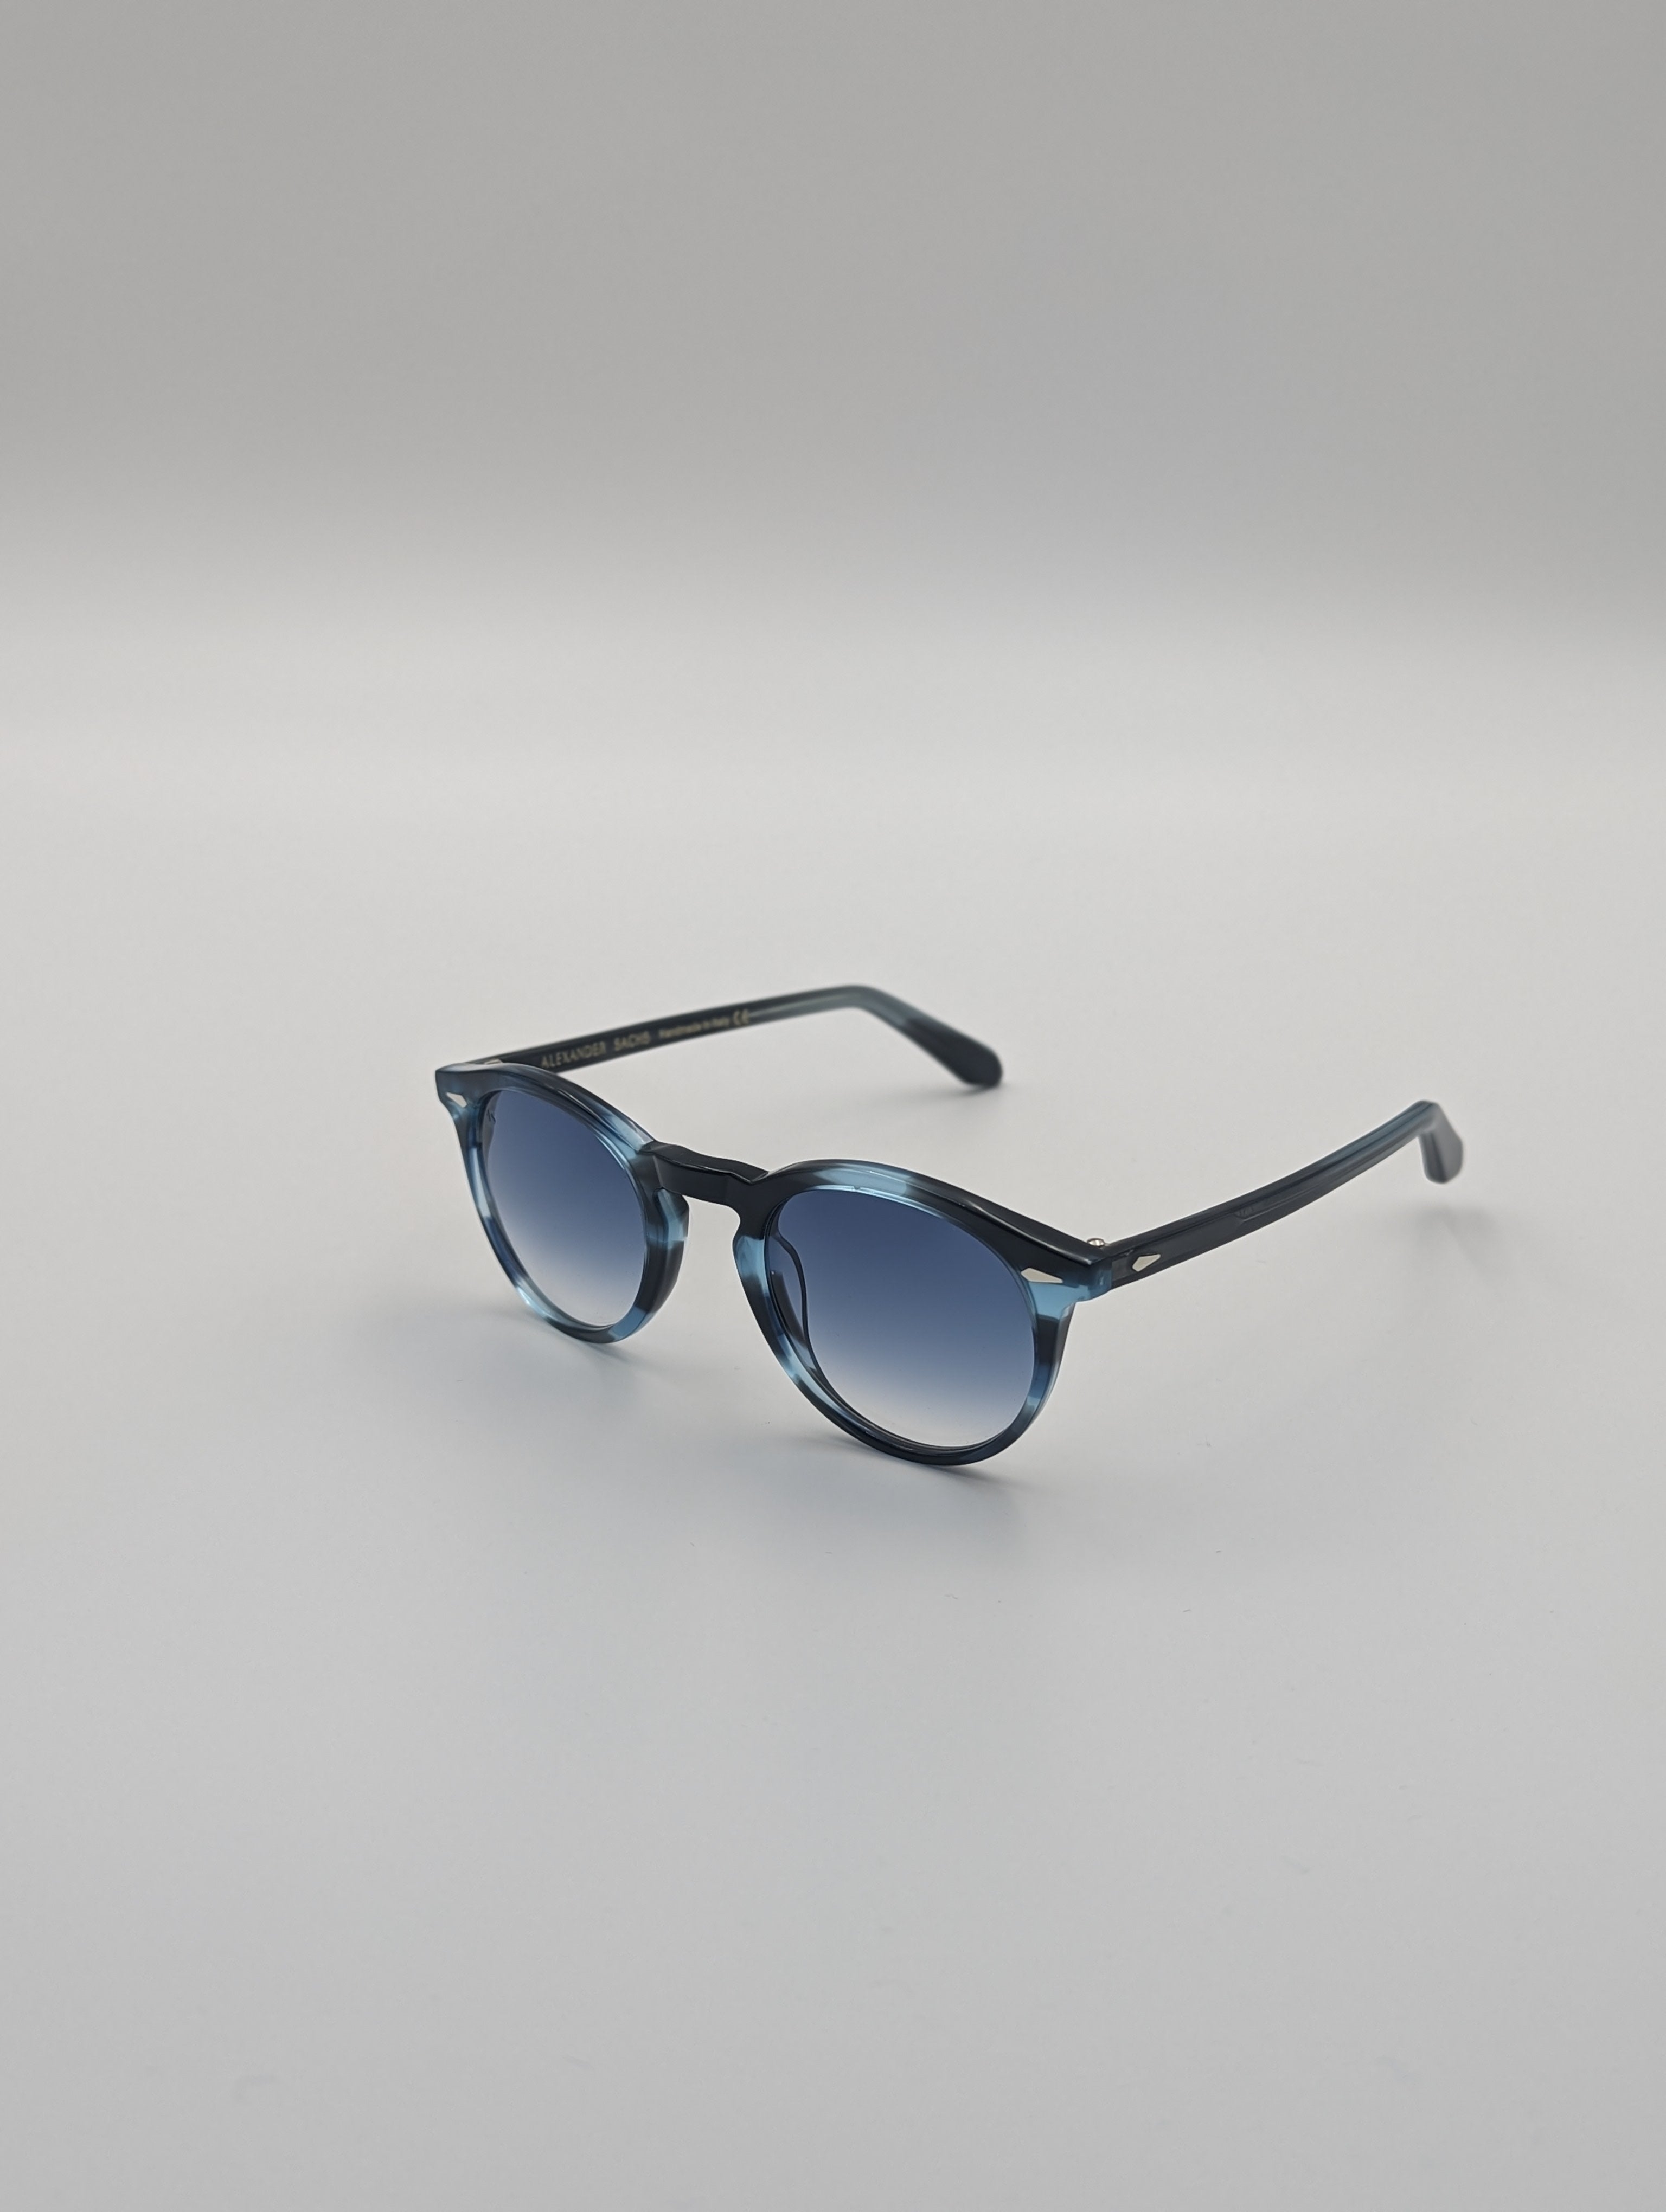 Sunglasses Iconic Tortoiseshell - Blue